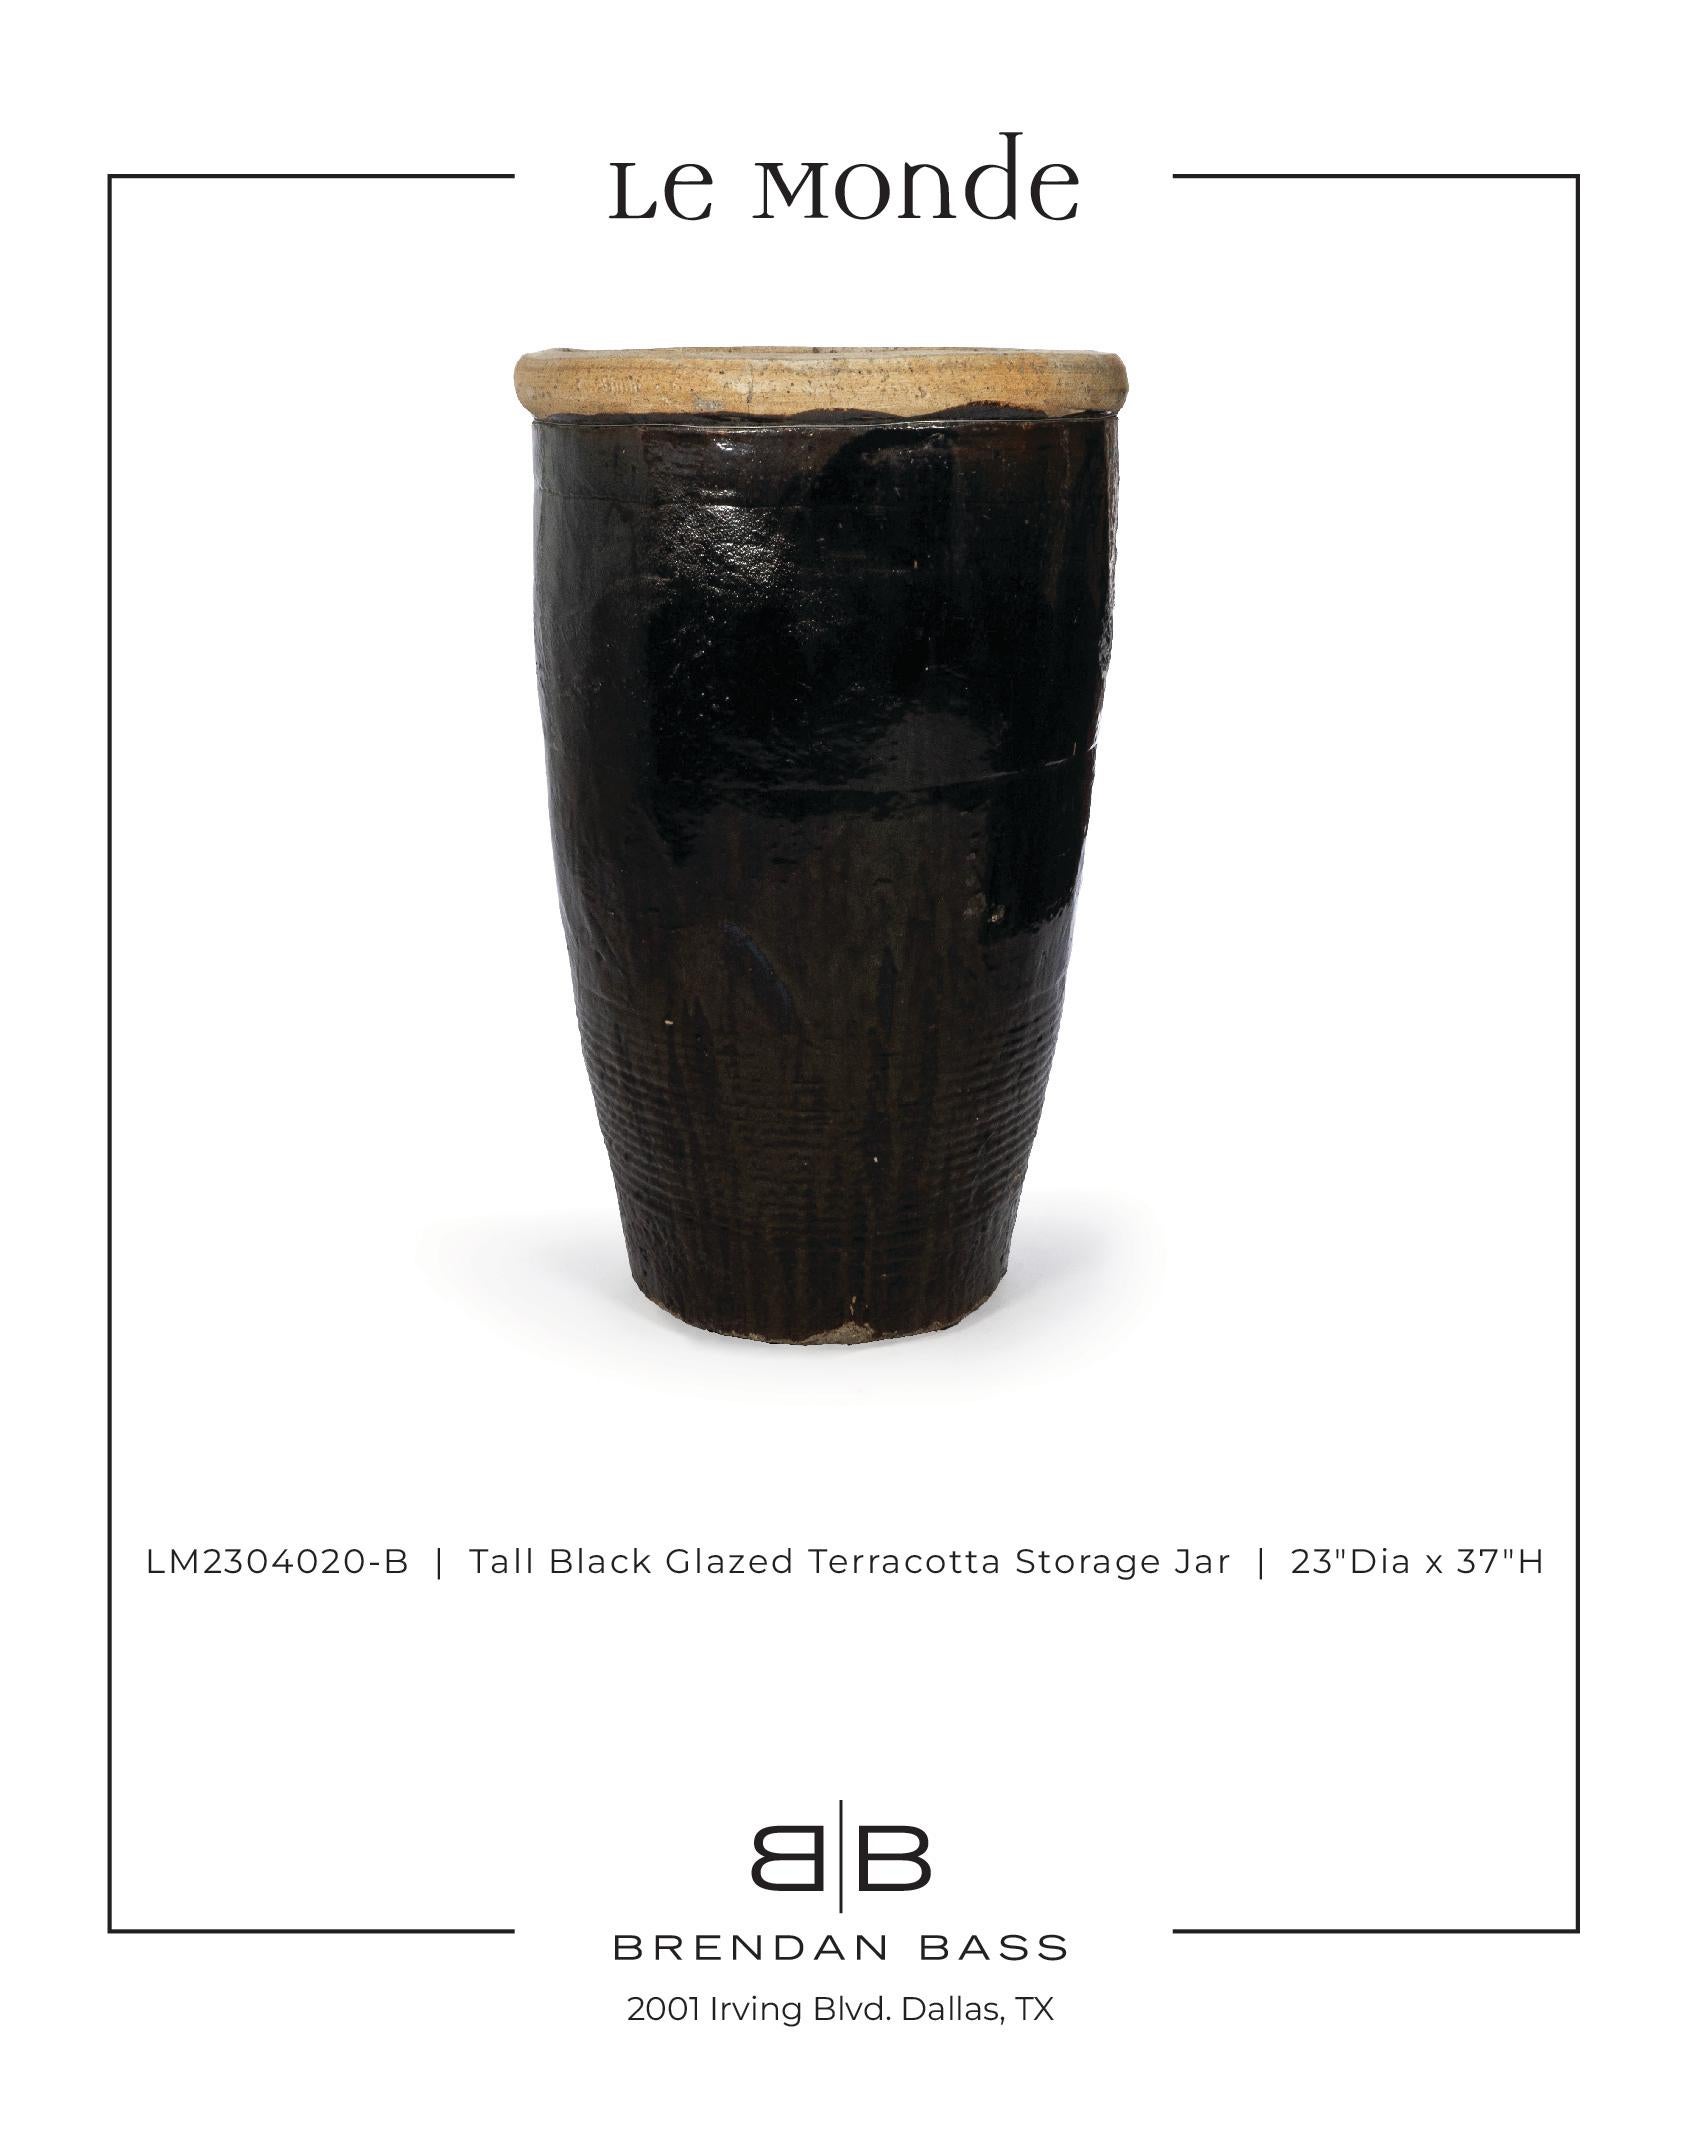 20th Century Tall Black Glazed Terracotta Storage Jar For Sale